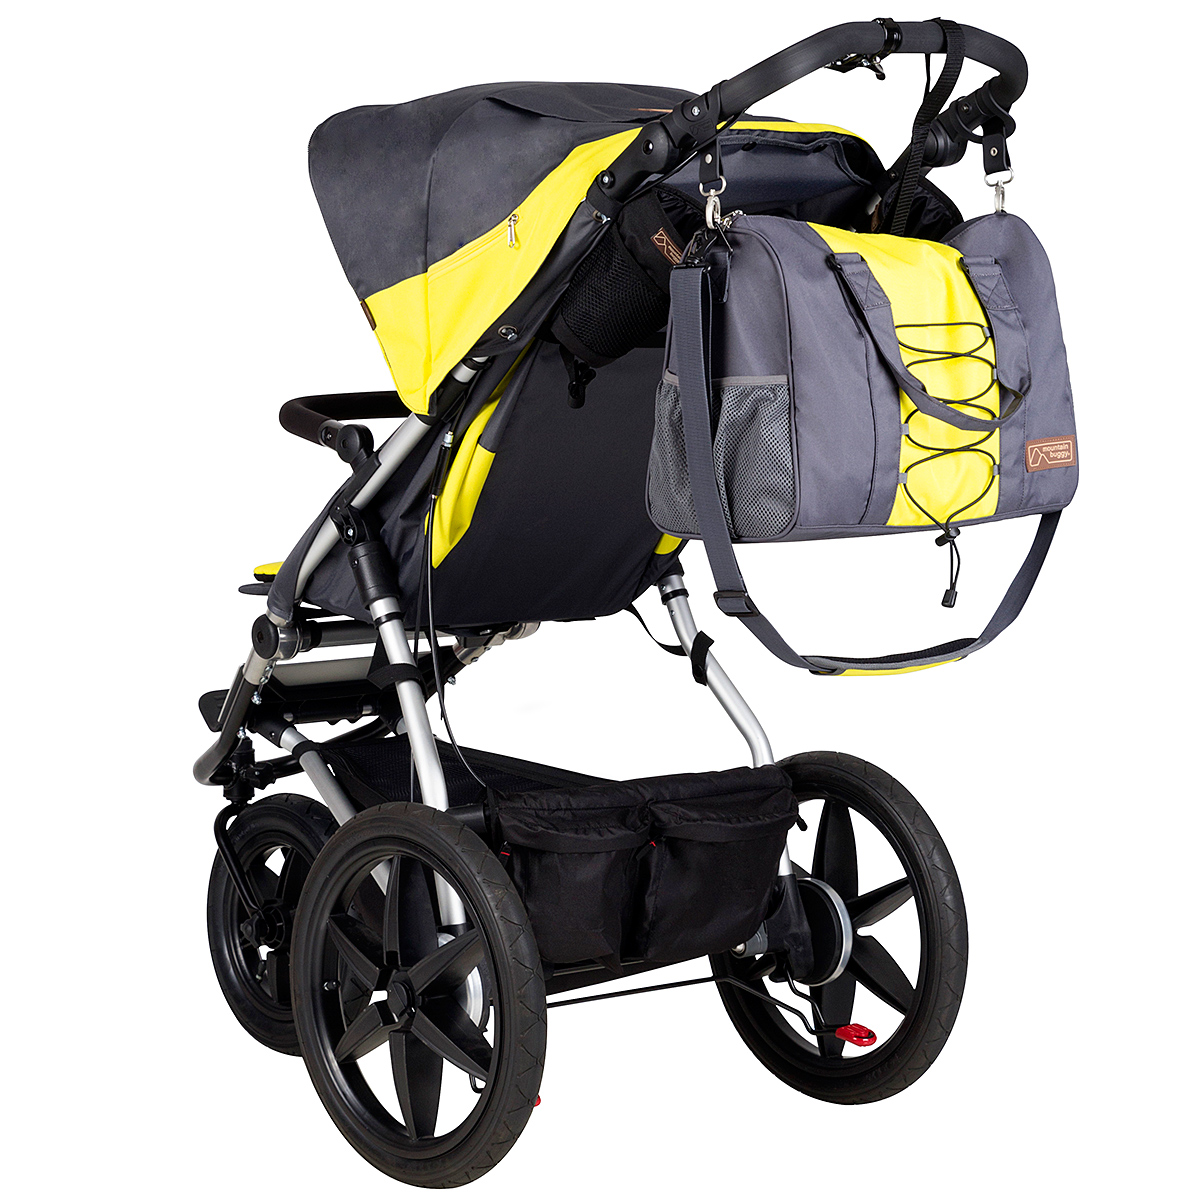 mountain-buggy-terrain-3-wheeler-all-terrain-stroller-solus-duffel-bag-attached-to-stroller